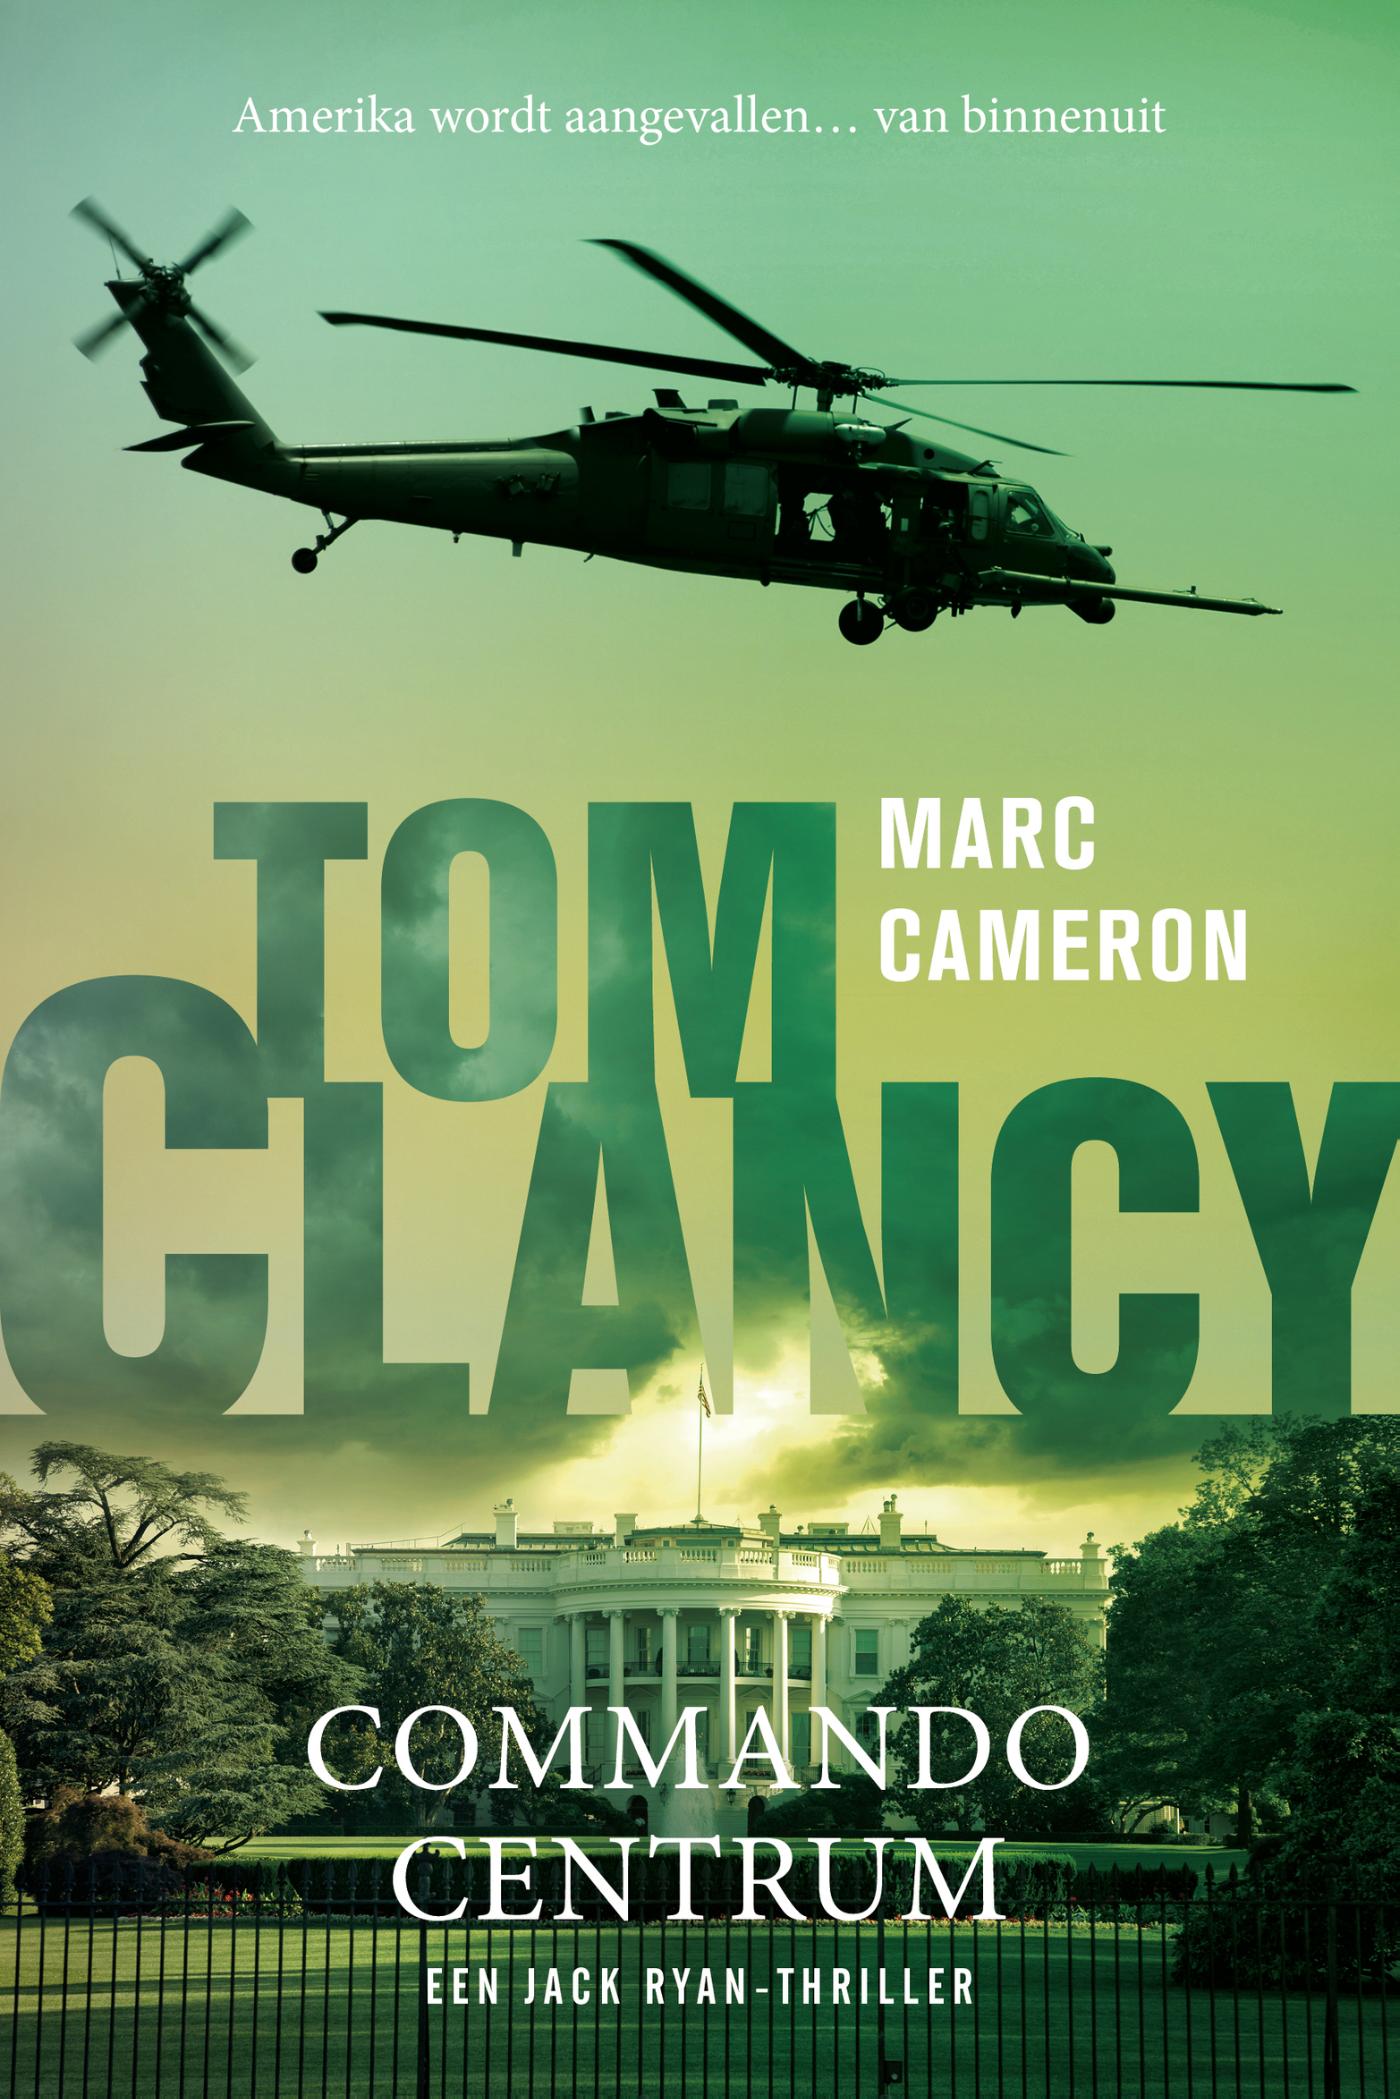 32 Tom Clancy CommandocentrumPaperback / softback